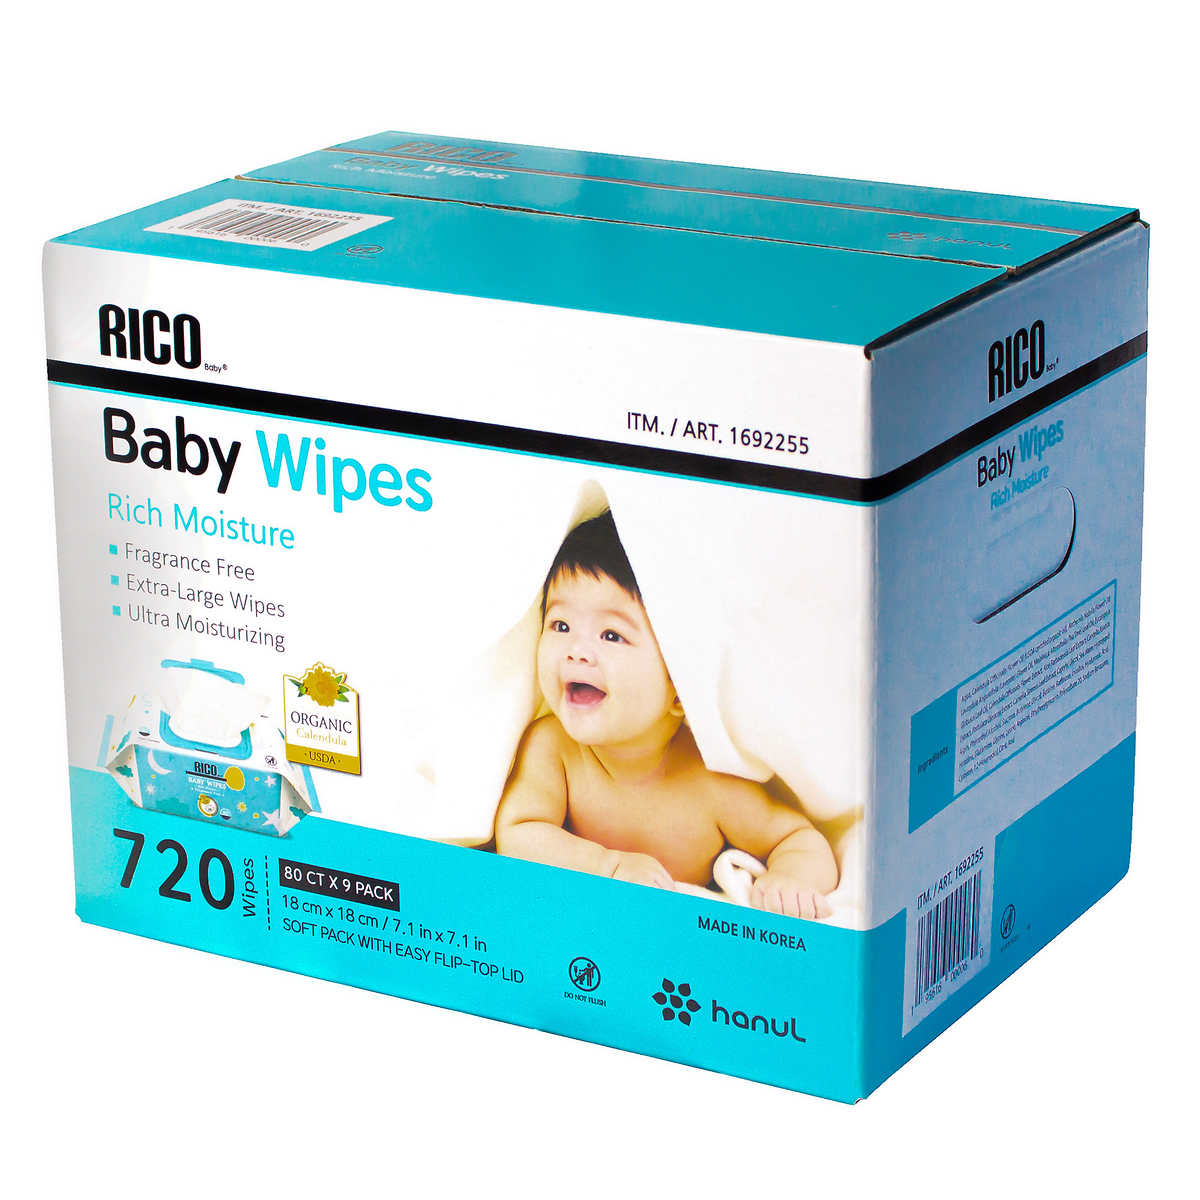 Buy Wet Ones Be Fresh Antibacterial Wipes 80 Pack Online at Chemist  Warehouse®